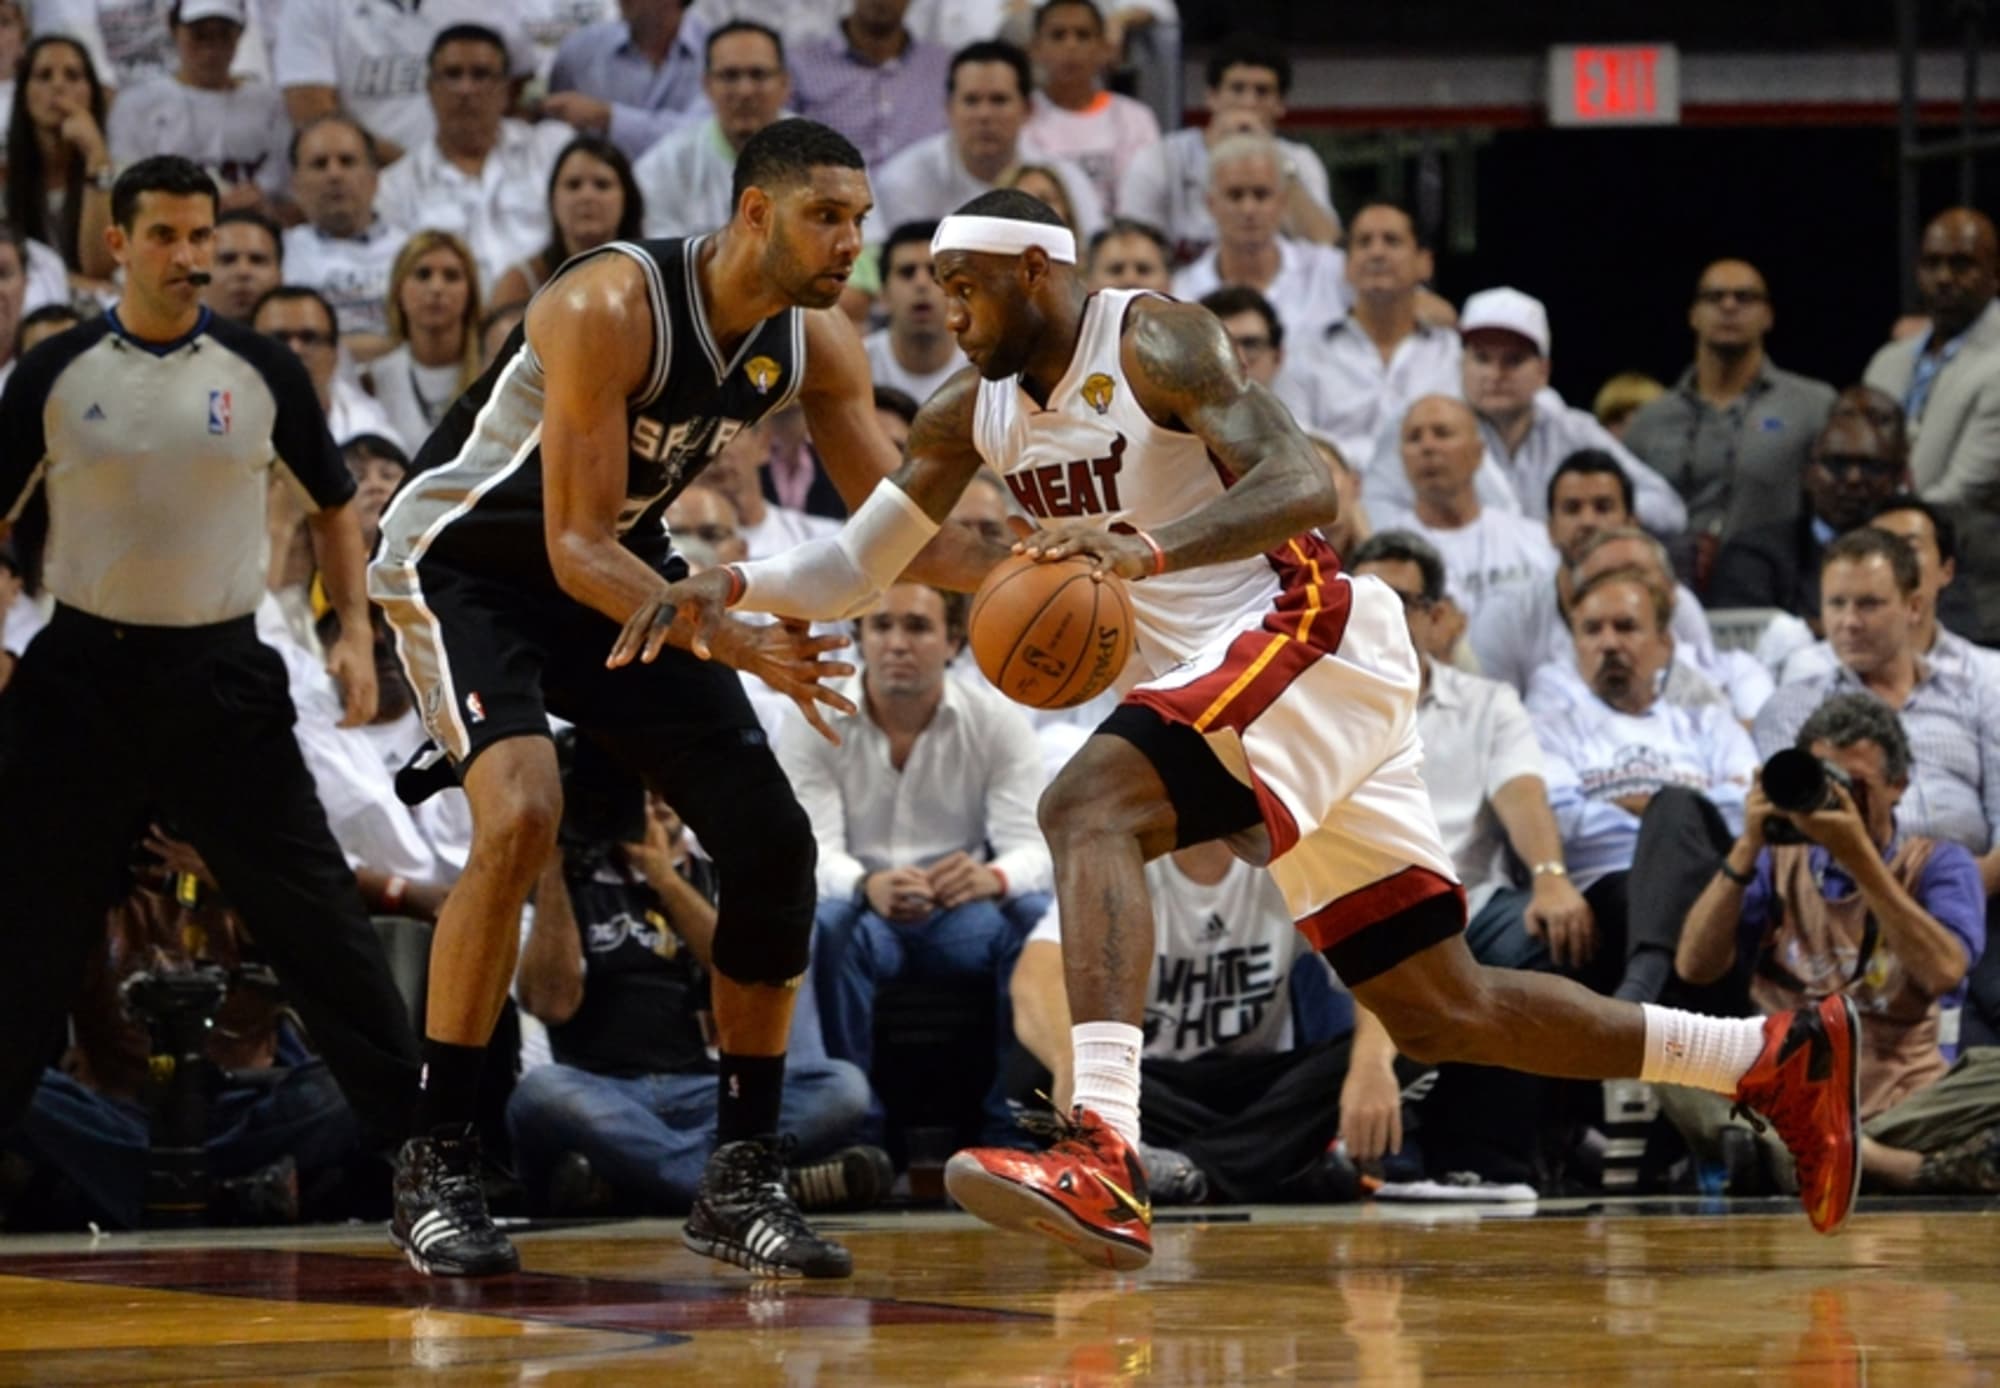 Spurs vs. Heat live stream Watch Game 4 of NBA Finals online